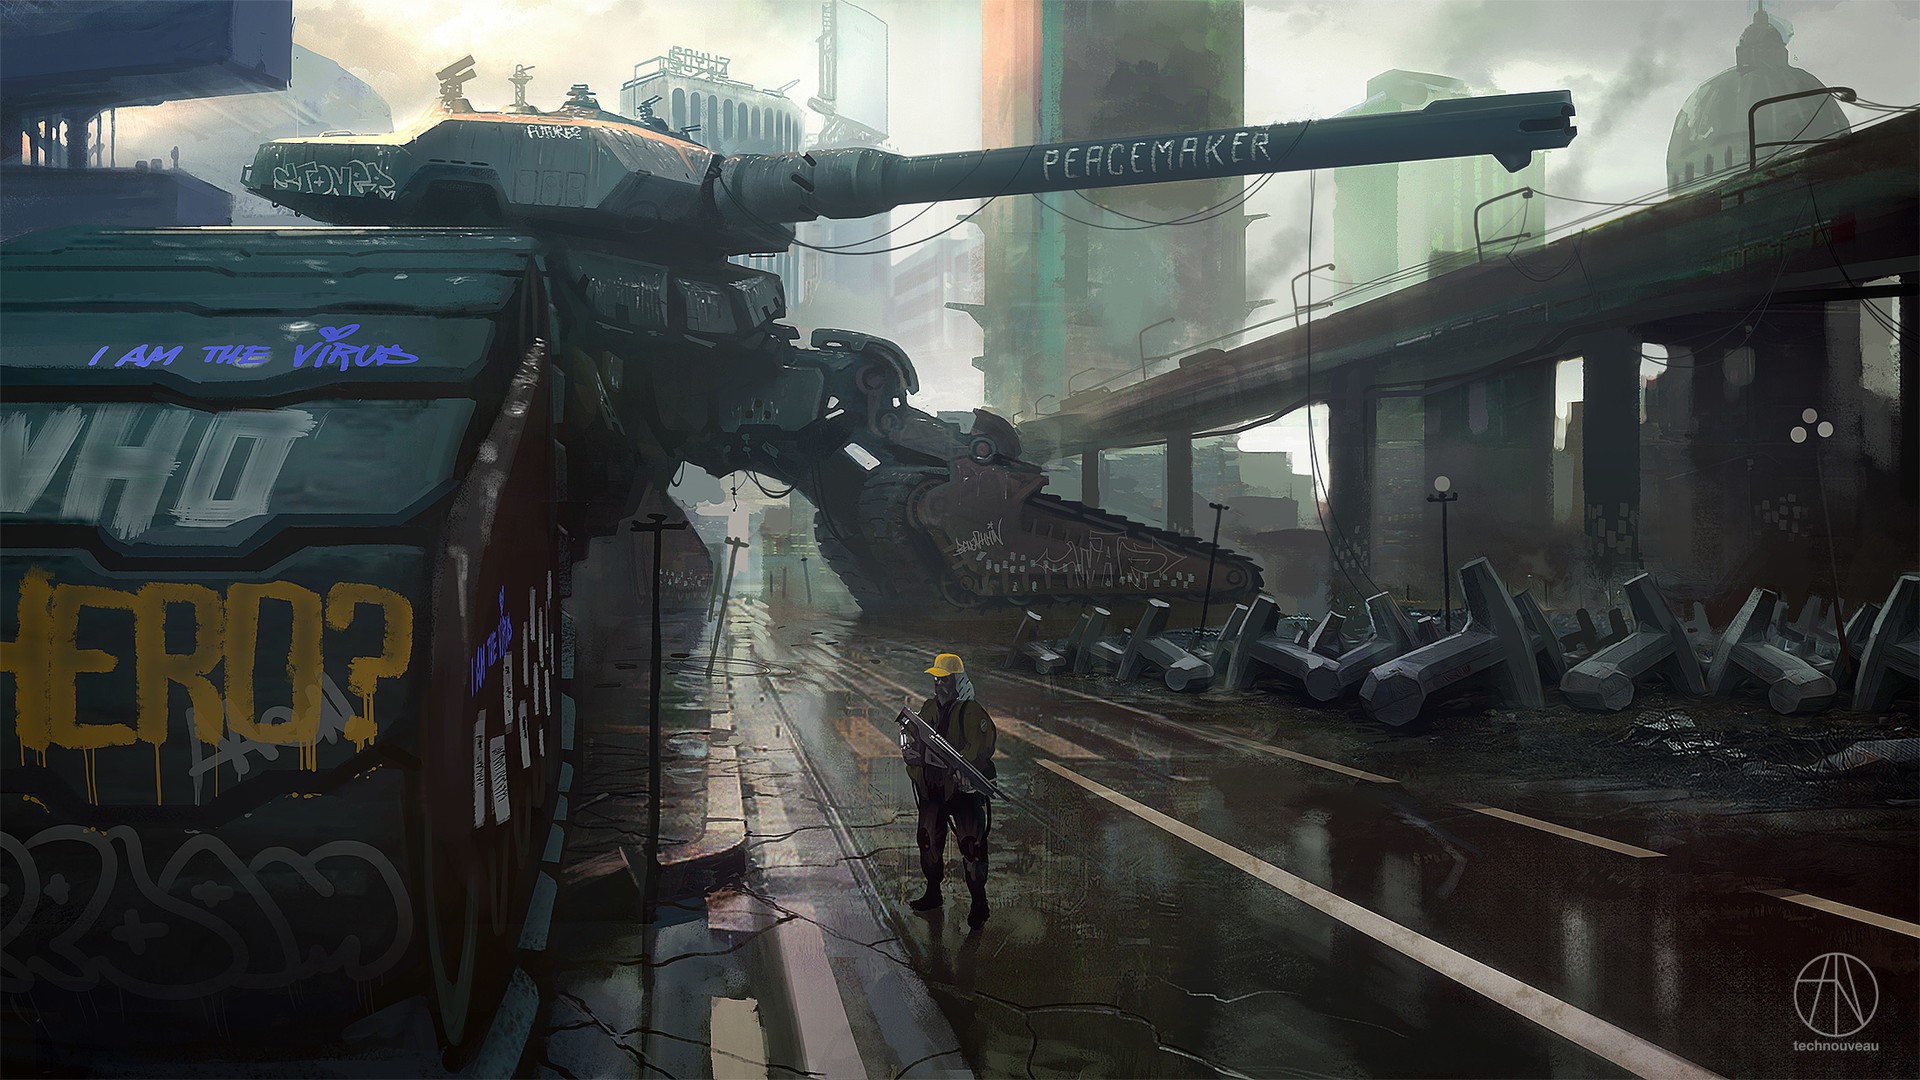 artwork, Concept art, Futuristic, Science fiction, Tank, City, Weapon